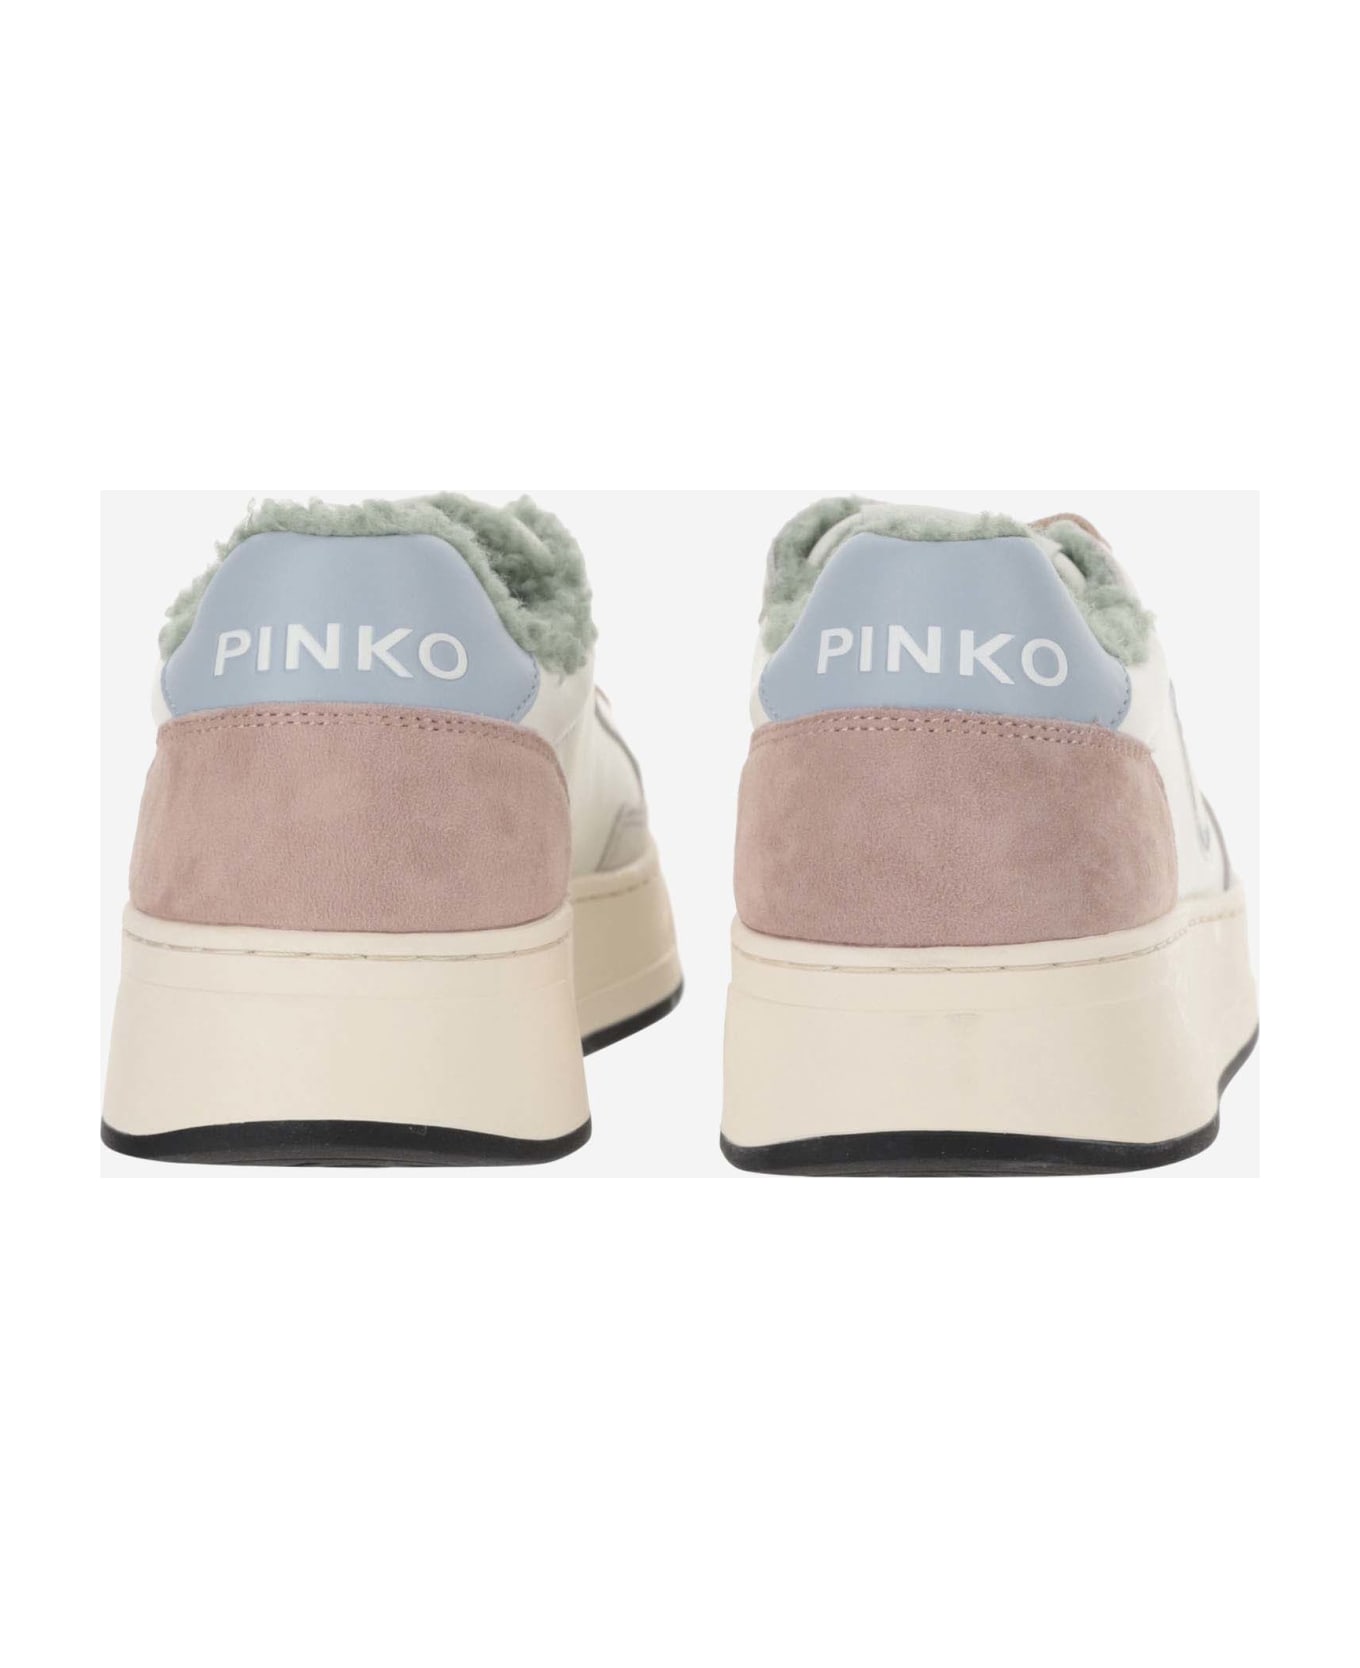 Pinko Bondy 2.0 Suede Sneakers - J Off White Beige Menta